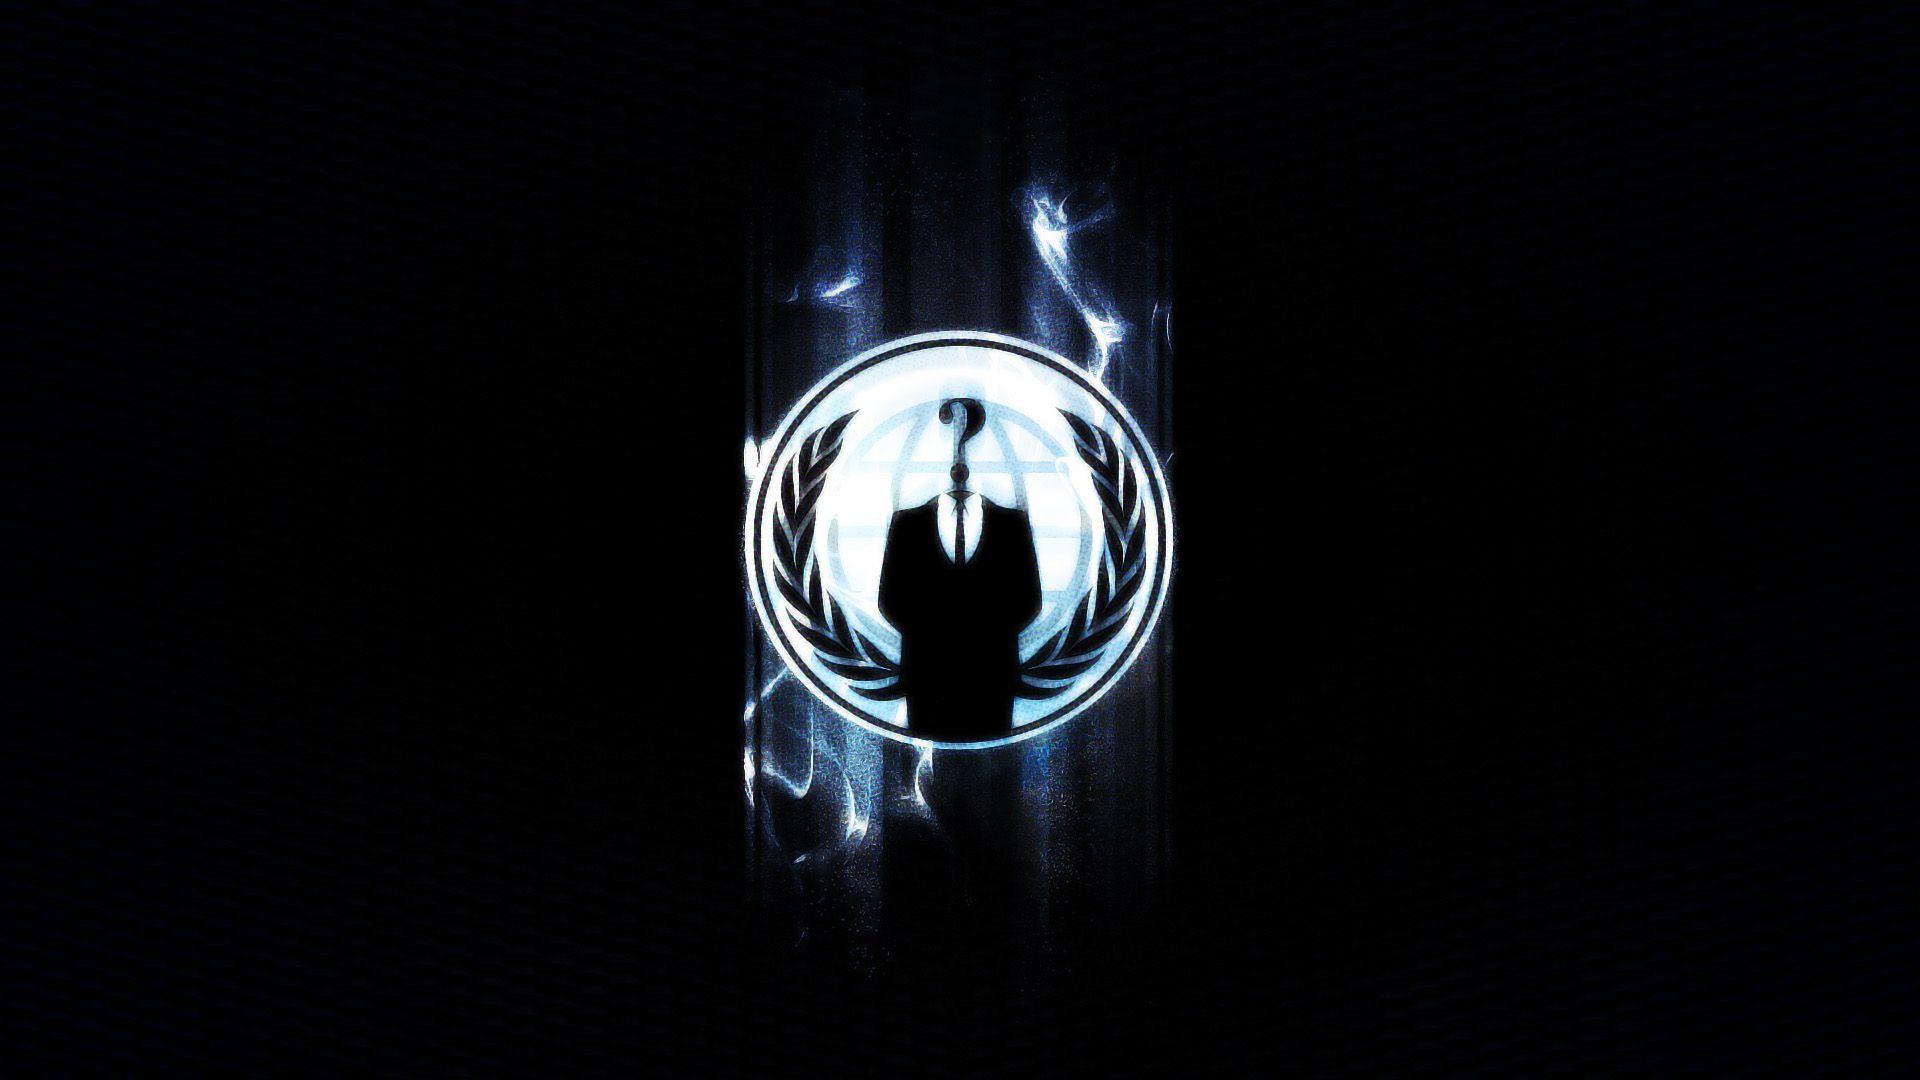 Anonymous Wallpaper. HD anonymous wallpaper 150x150. #Anonymous